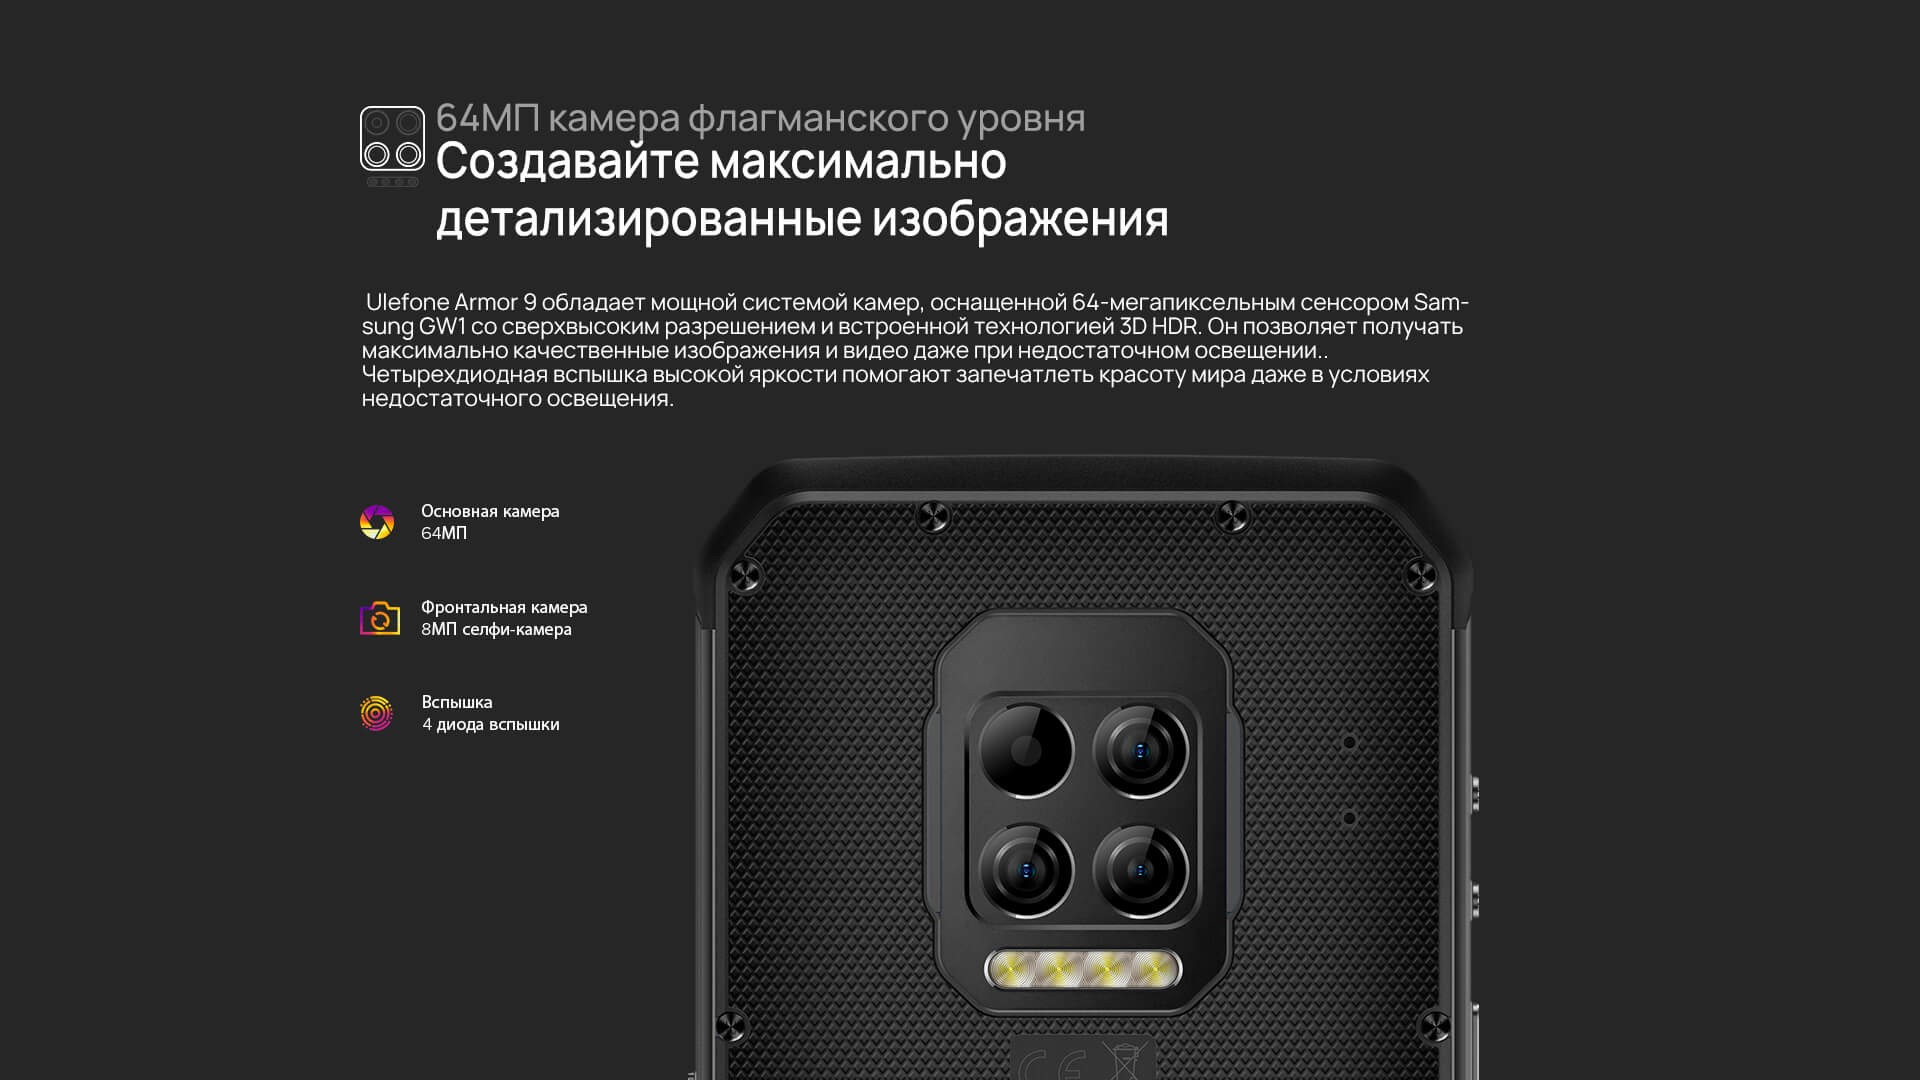 Ulefone Armor 9 - камера 64Мп